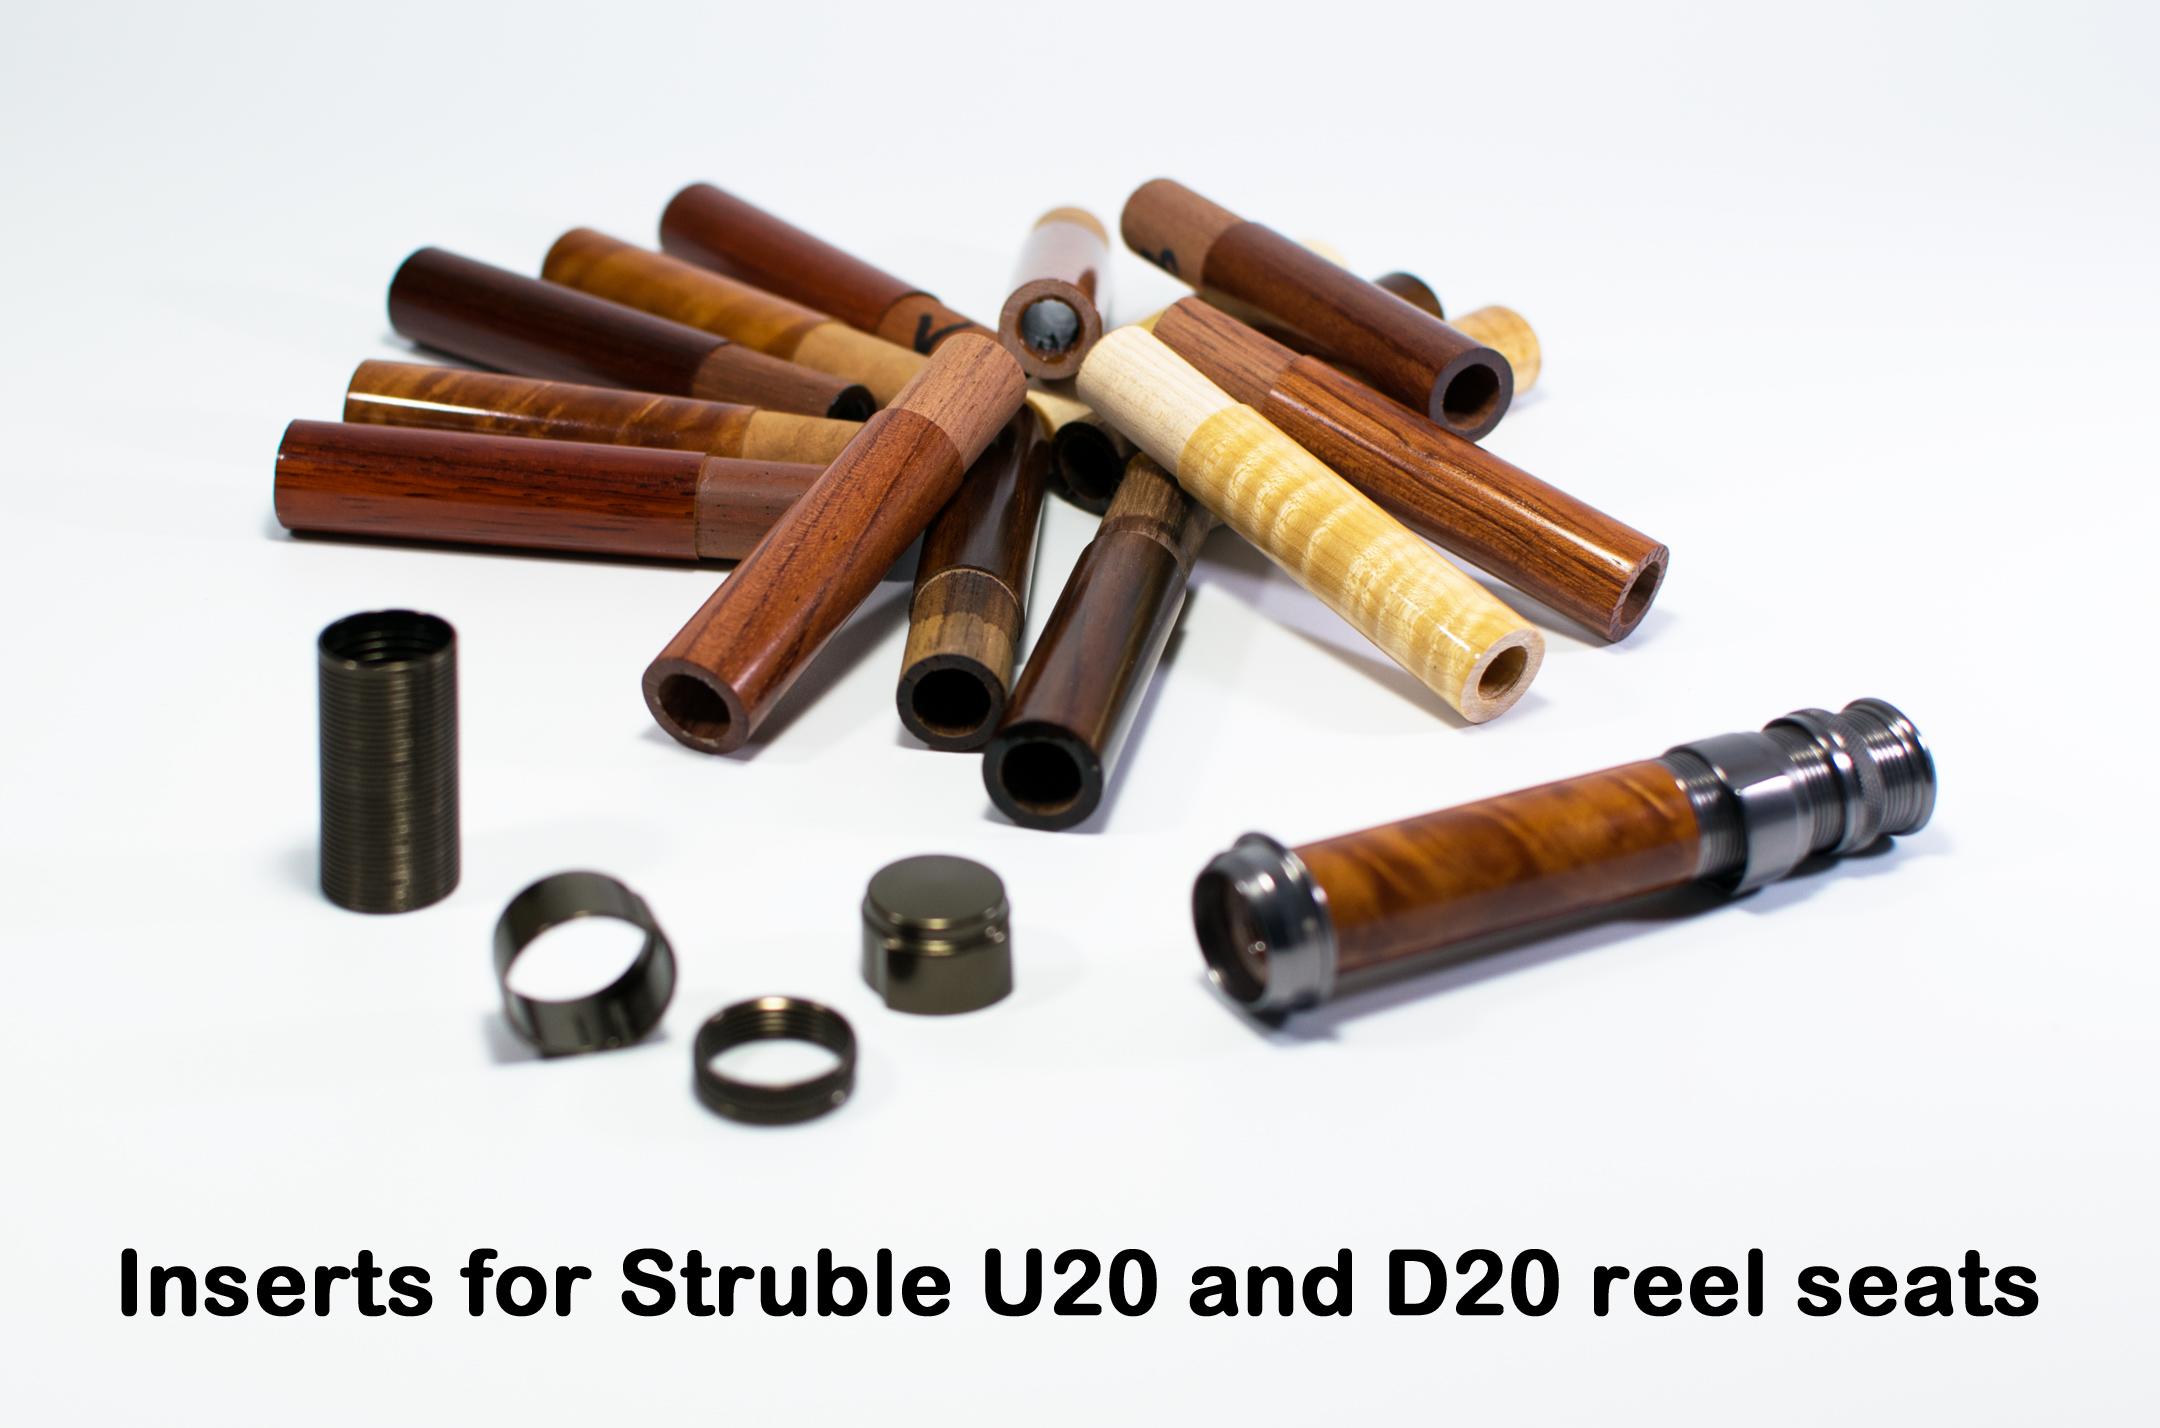 Struble hardwood inserts for reel seat model U20 and D20